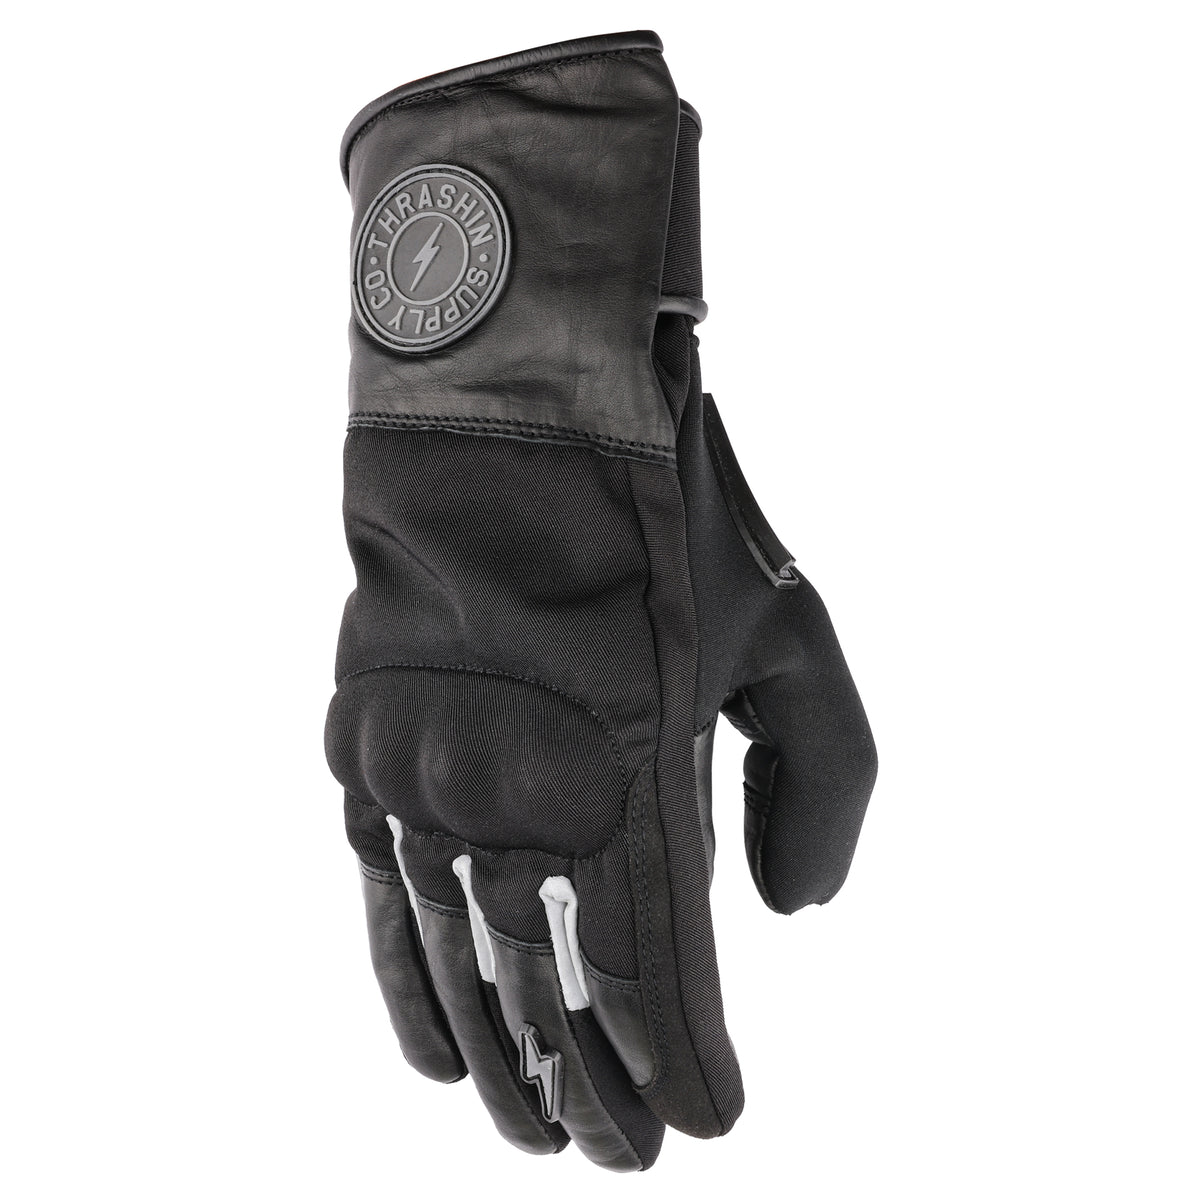 Thrashin Supply Company Waterproof Mission Gloves (Small, Black)